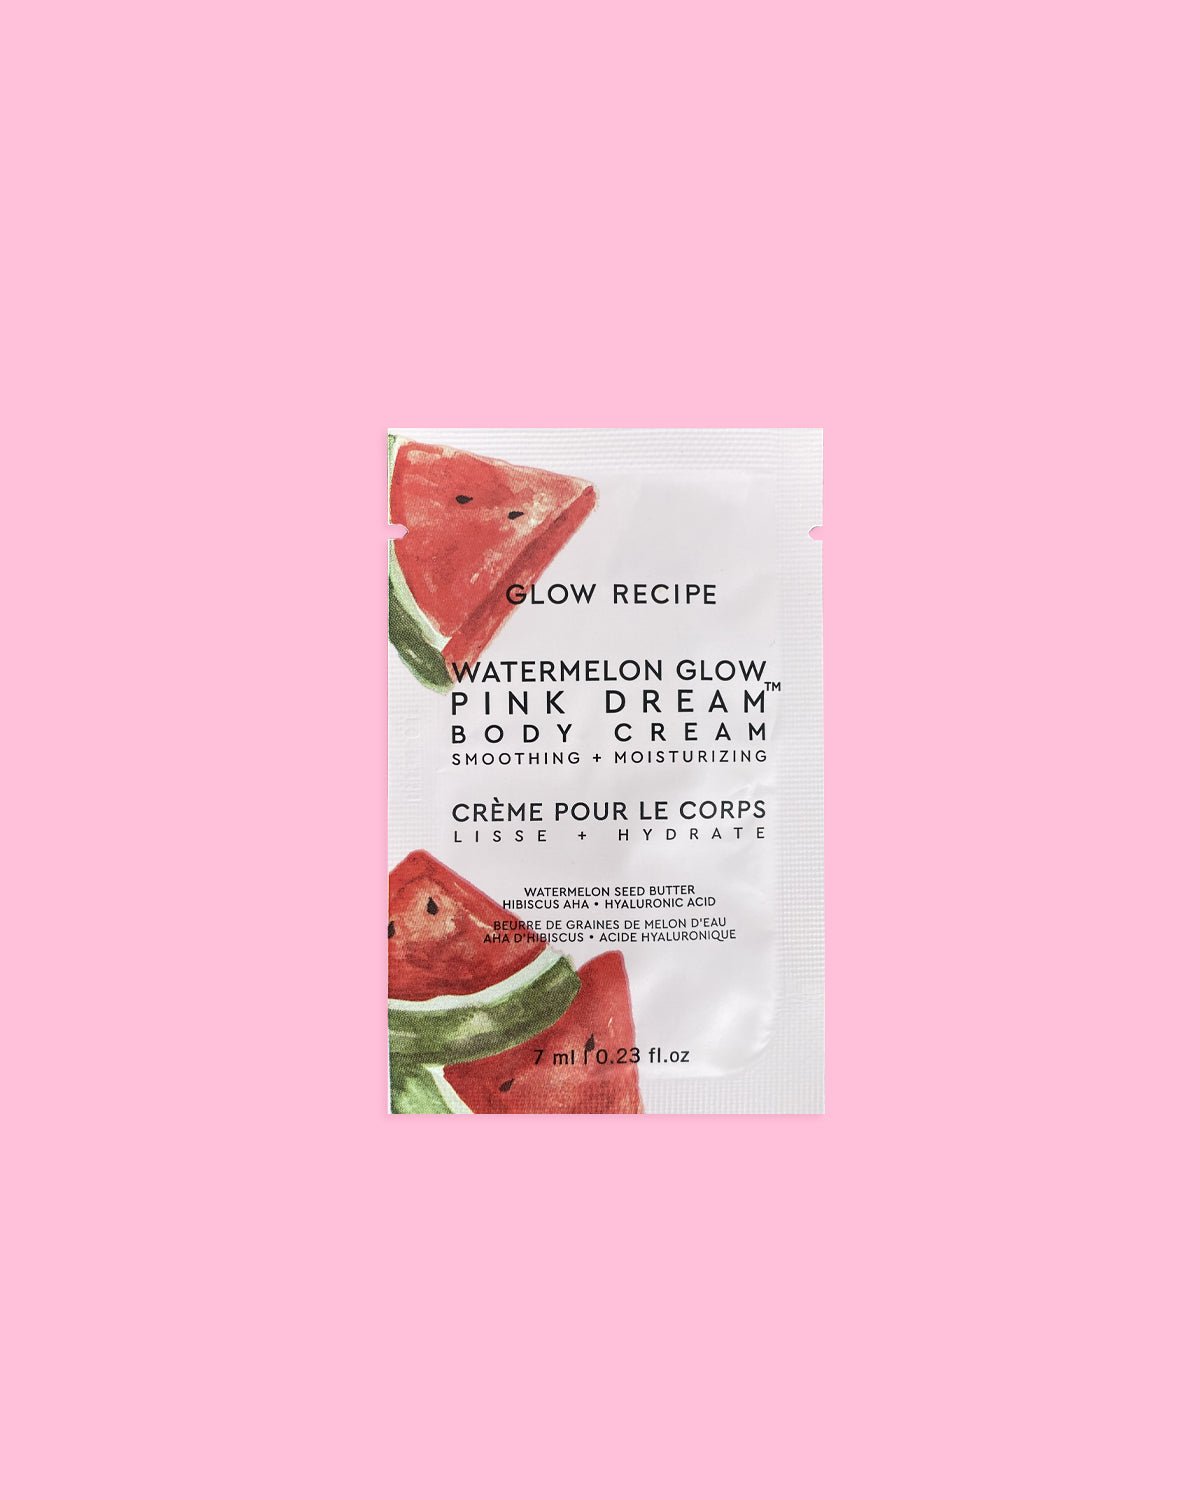 Watermelon Glow Pink Dream Body Cream Sachet Sample